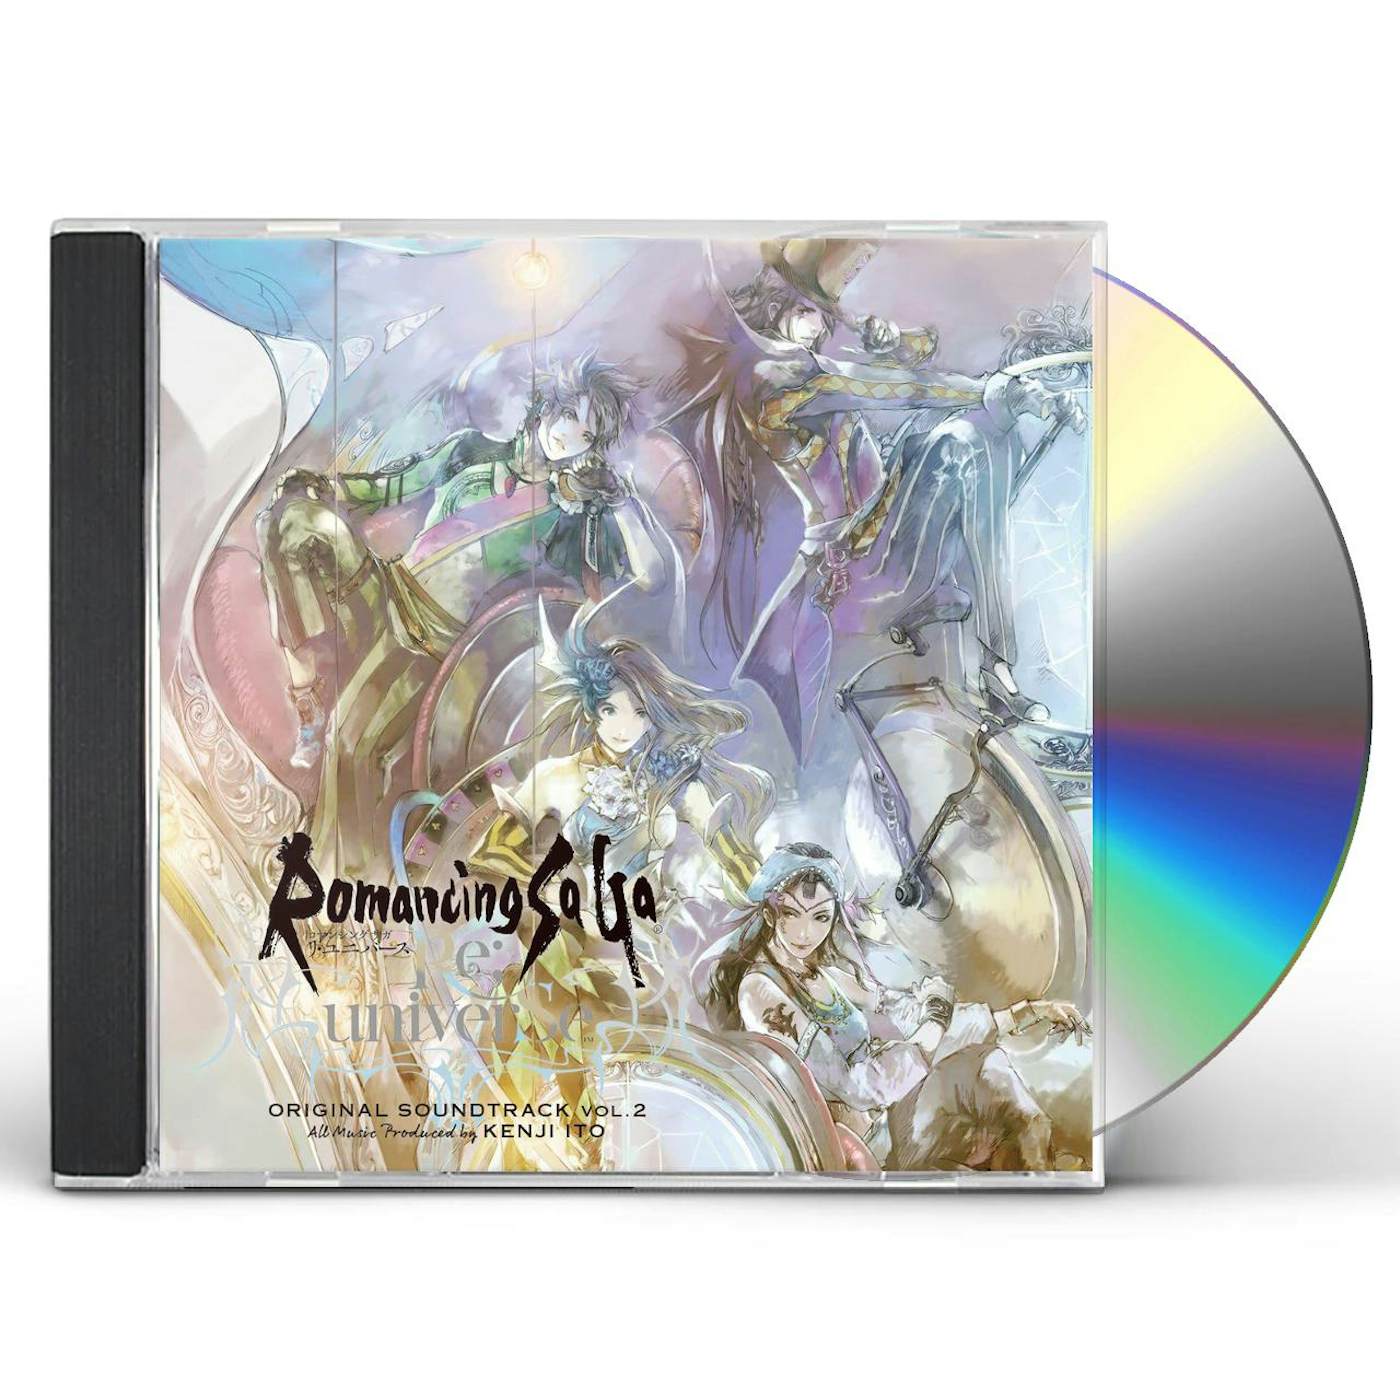 Kenji Ito Romancing Saga Re;Universe Original Soundtrack Vol.2 CD